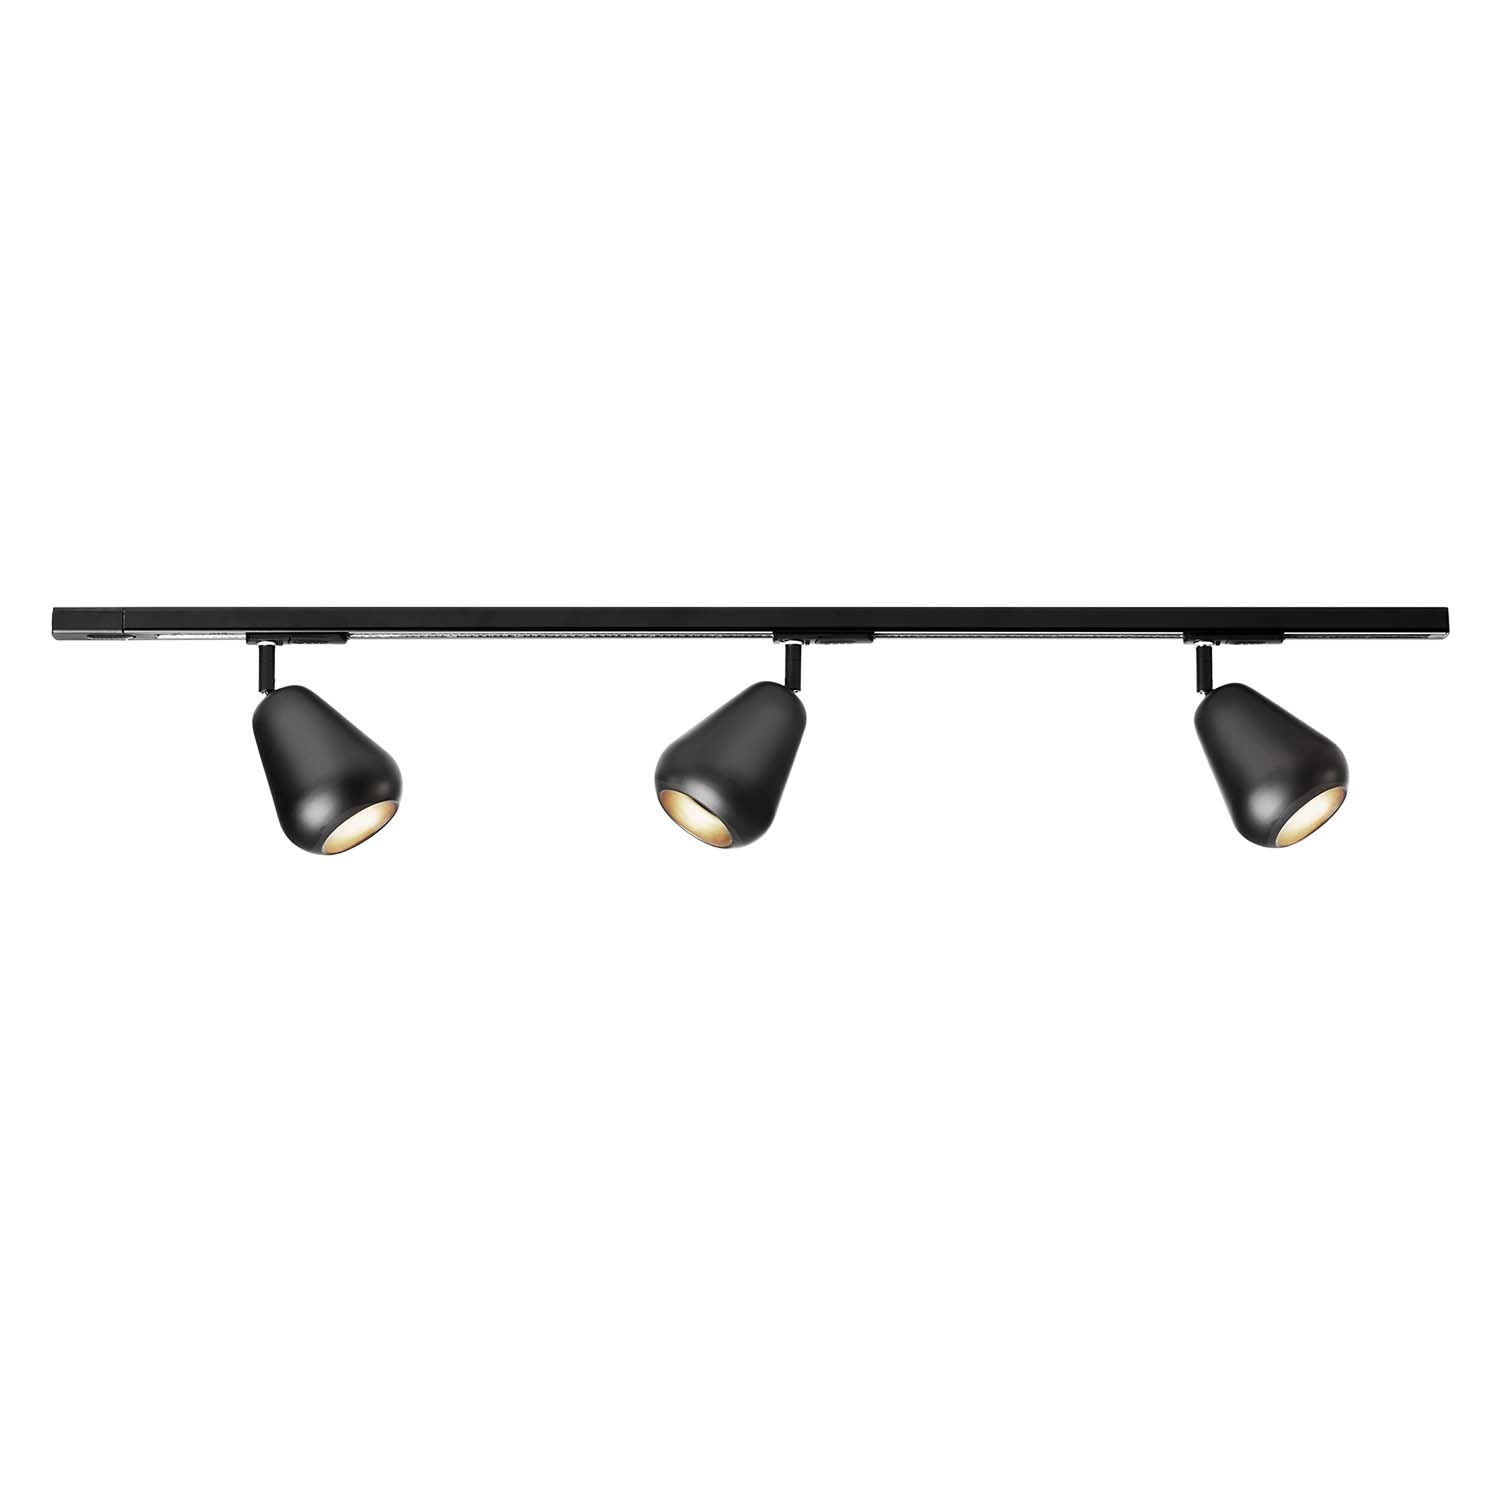 ANOLI SPOT - Minimalist and designer adjustable wall spotlight rail